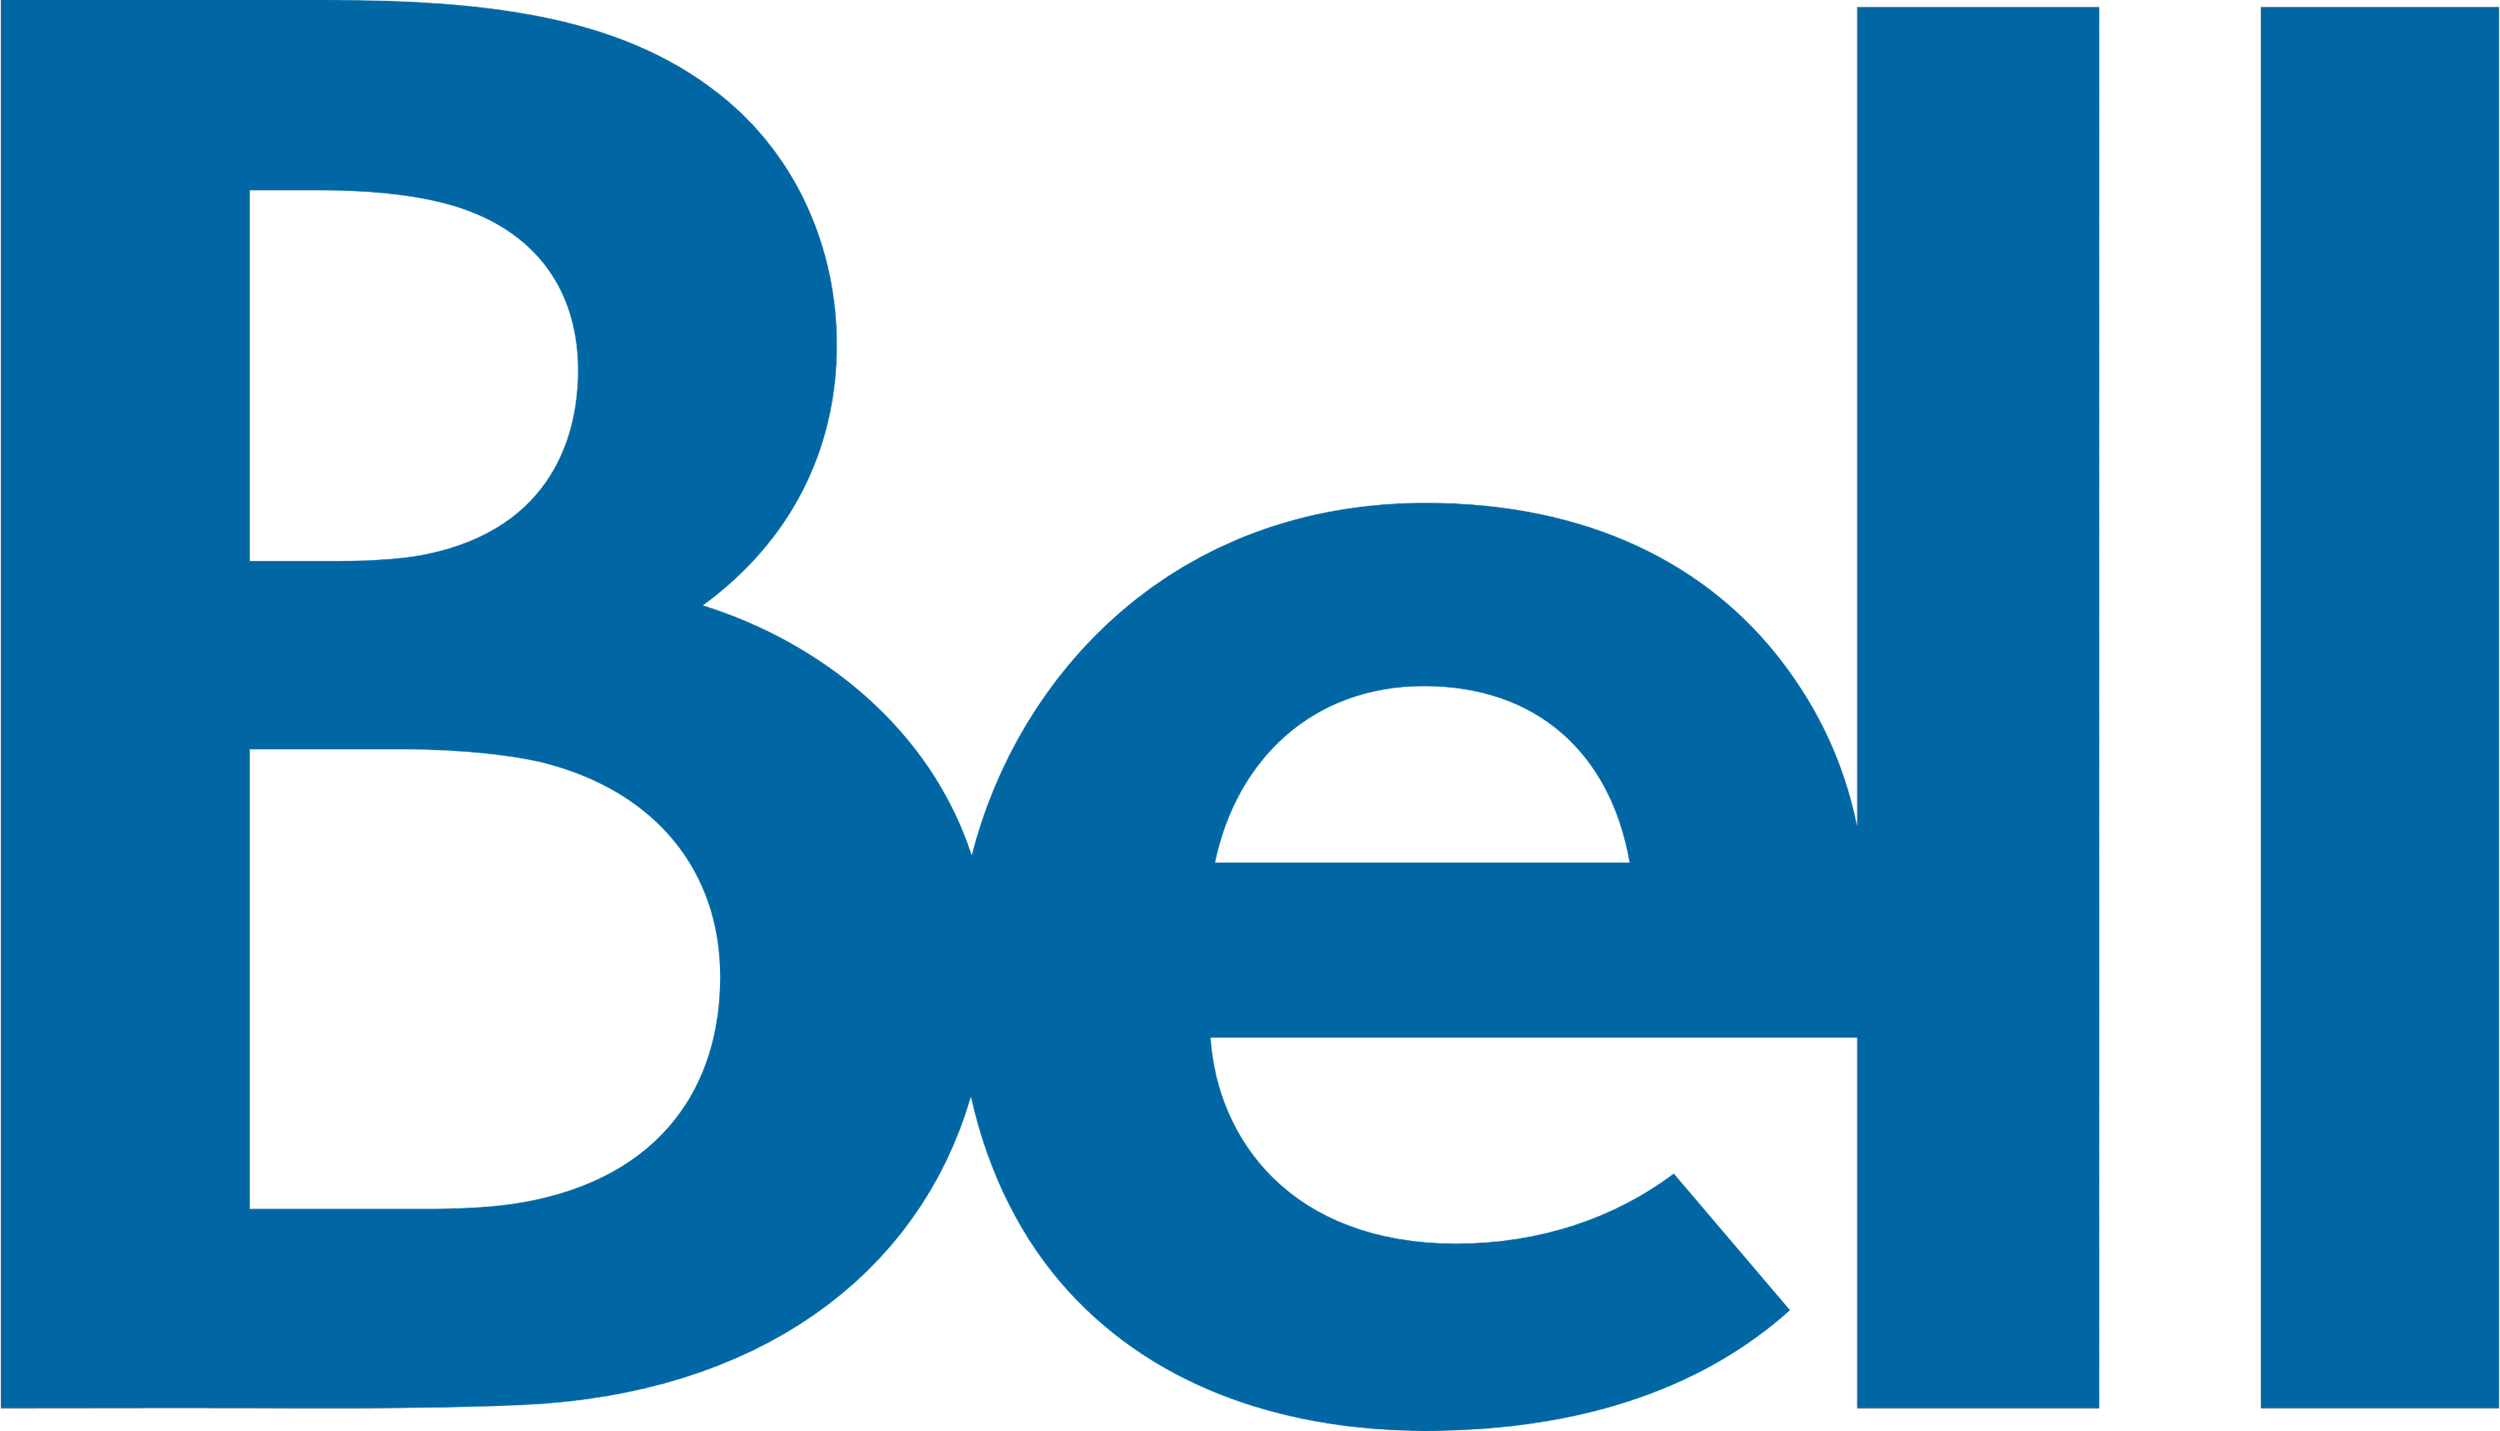 Bell_Canada_logo_logotype.png